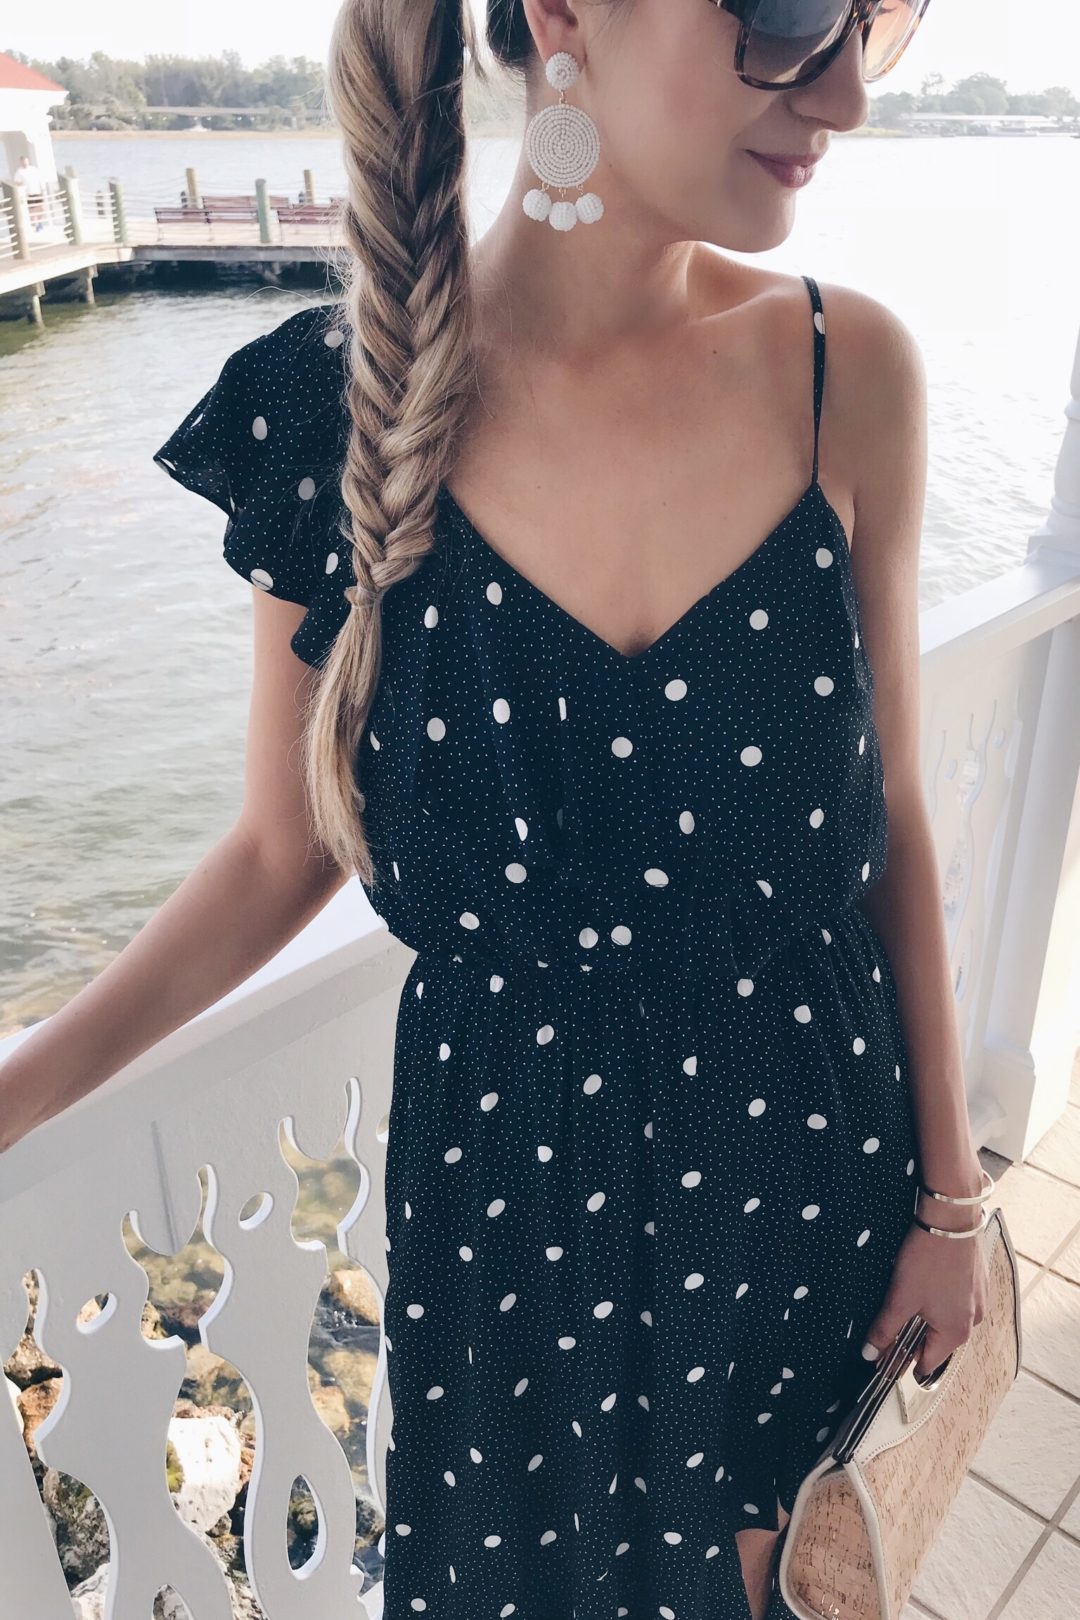 spring trend ruffles - polka dot dress on rachel moore connecticut lifestyle blogger